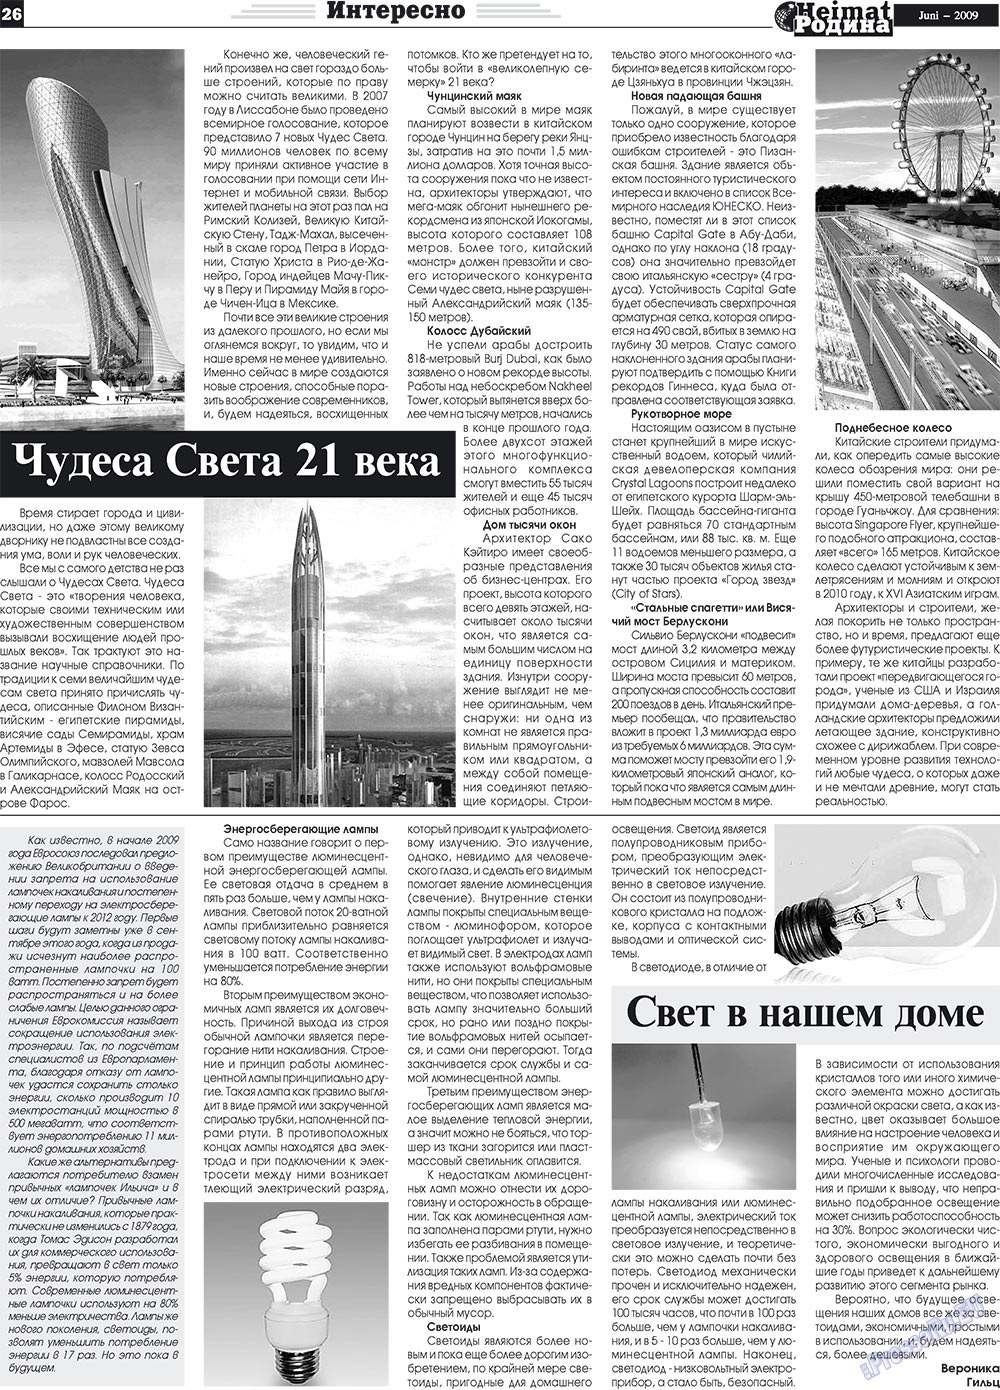 Heimat-Родина, газета. 2009 №6 стр.26